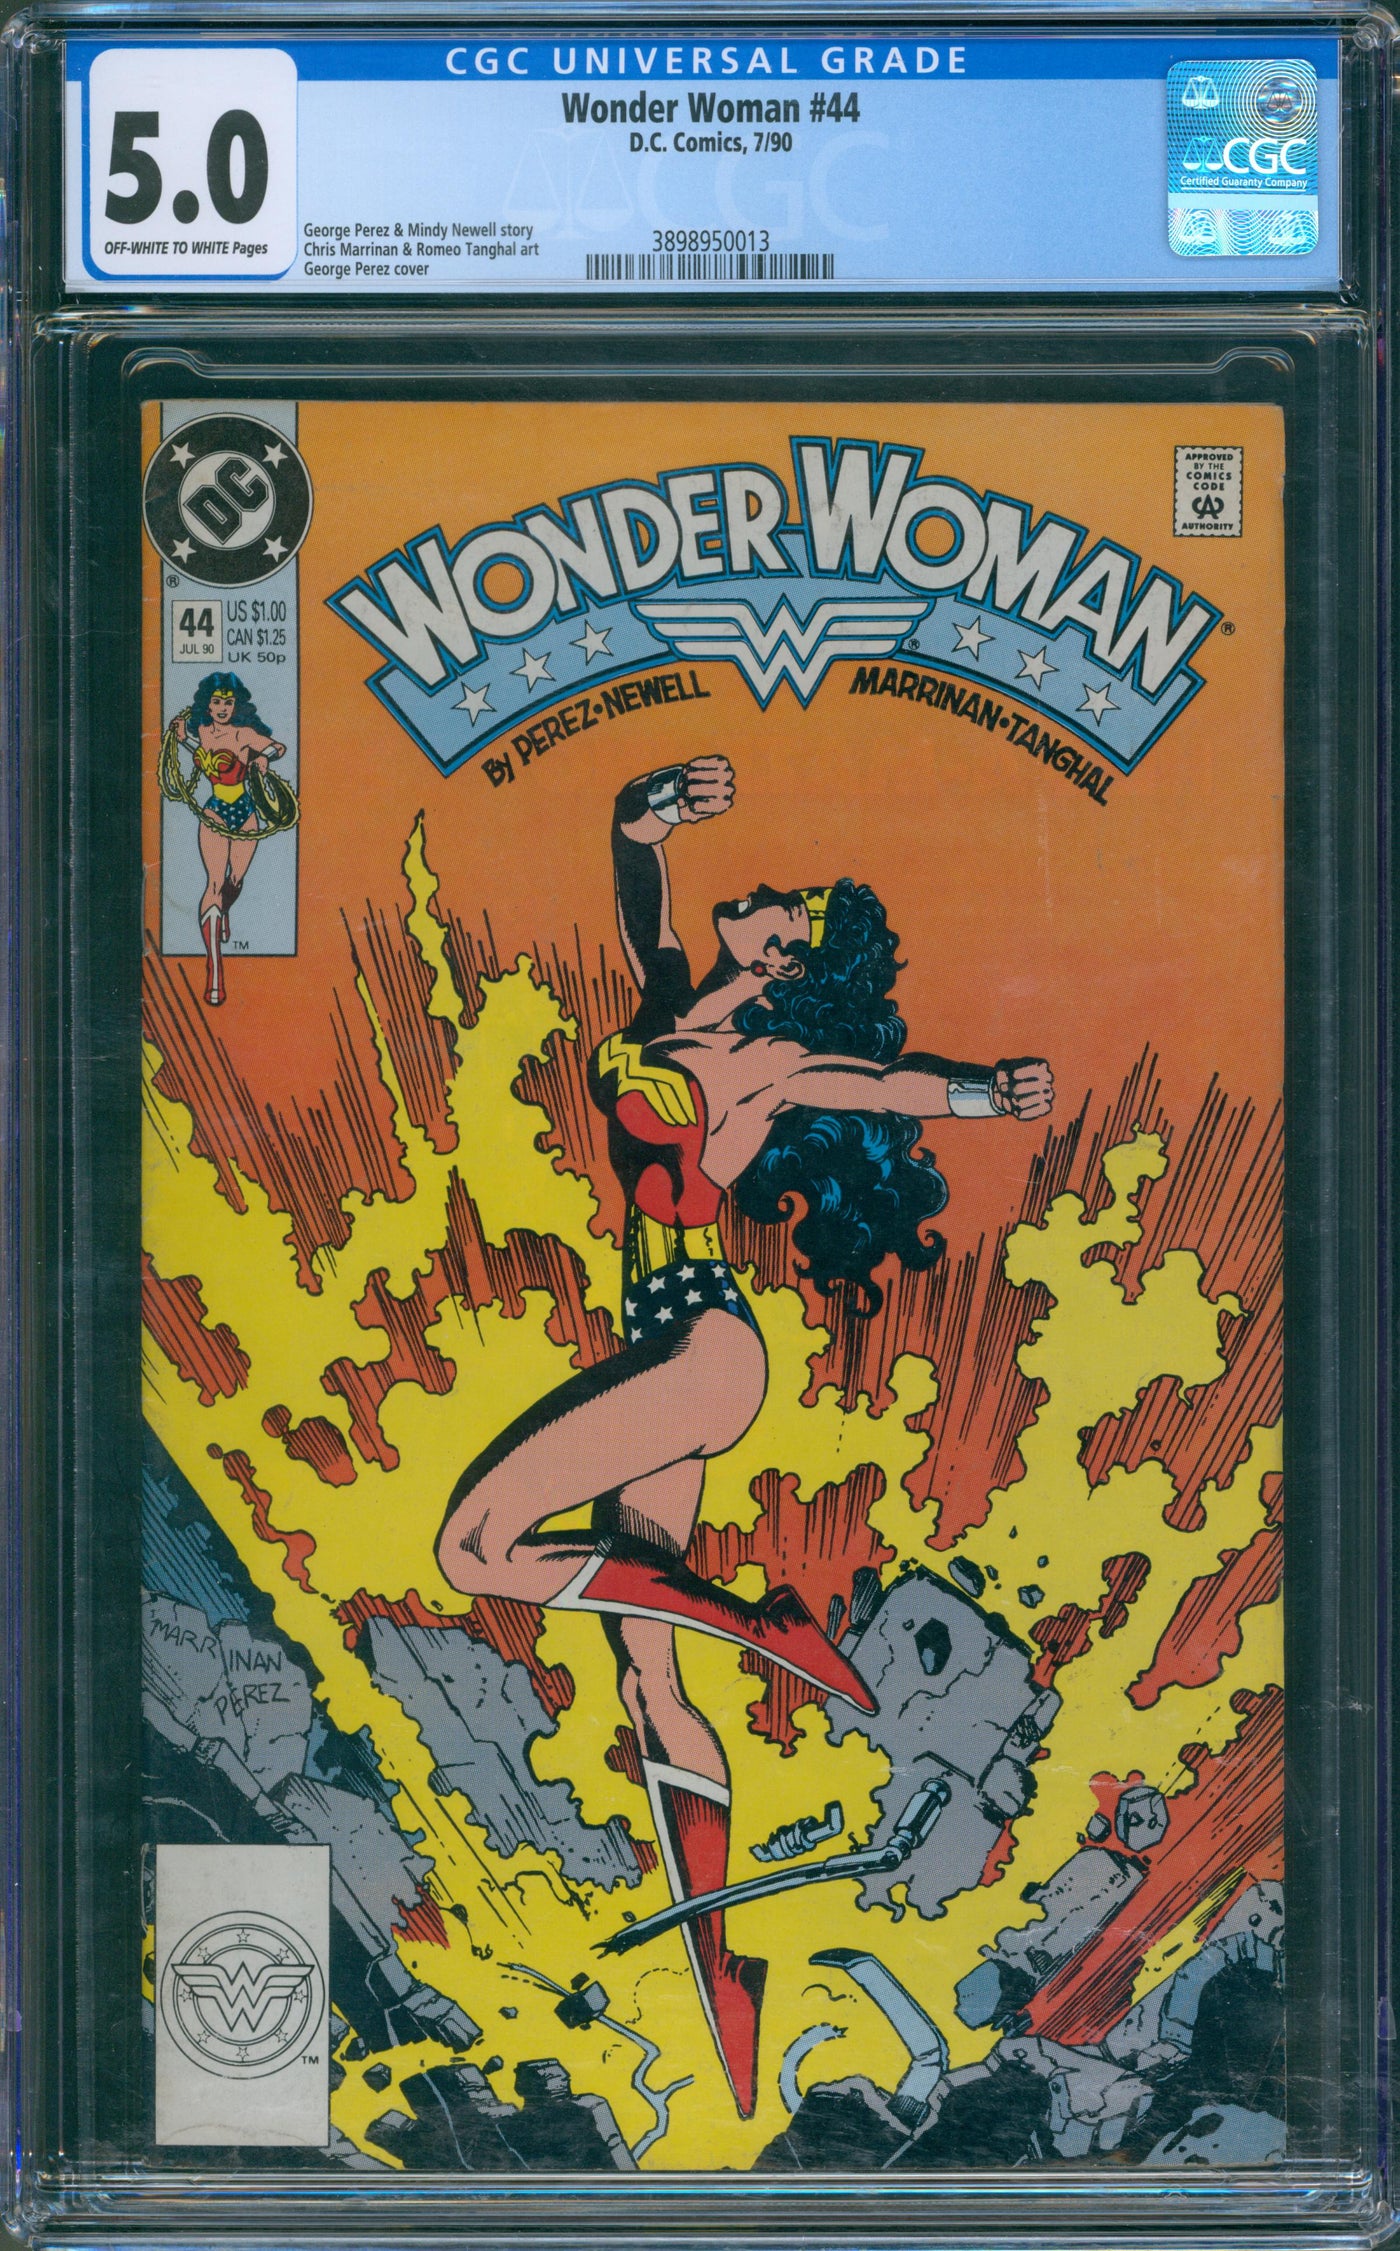 Wonder woman #44 CGC 5.0